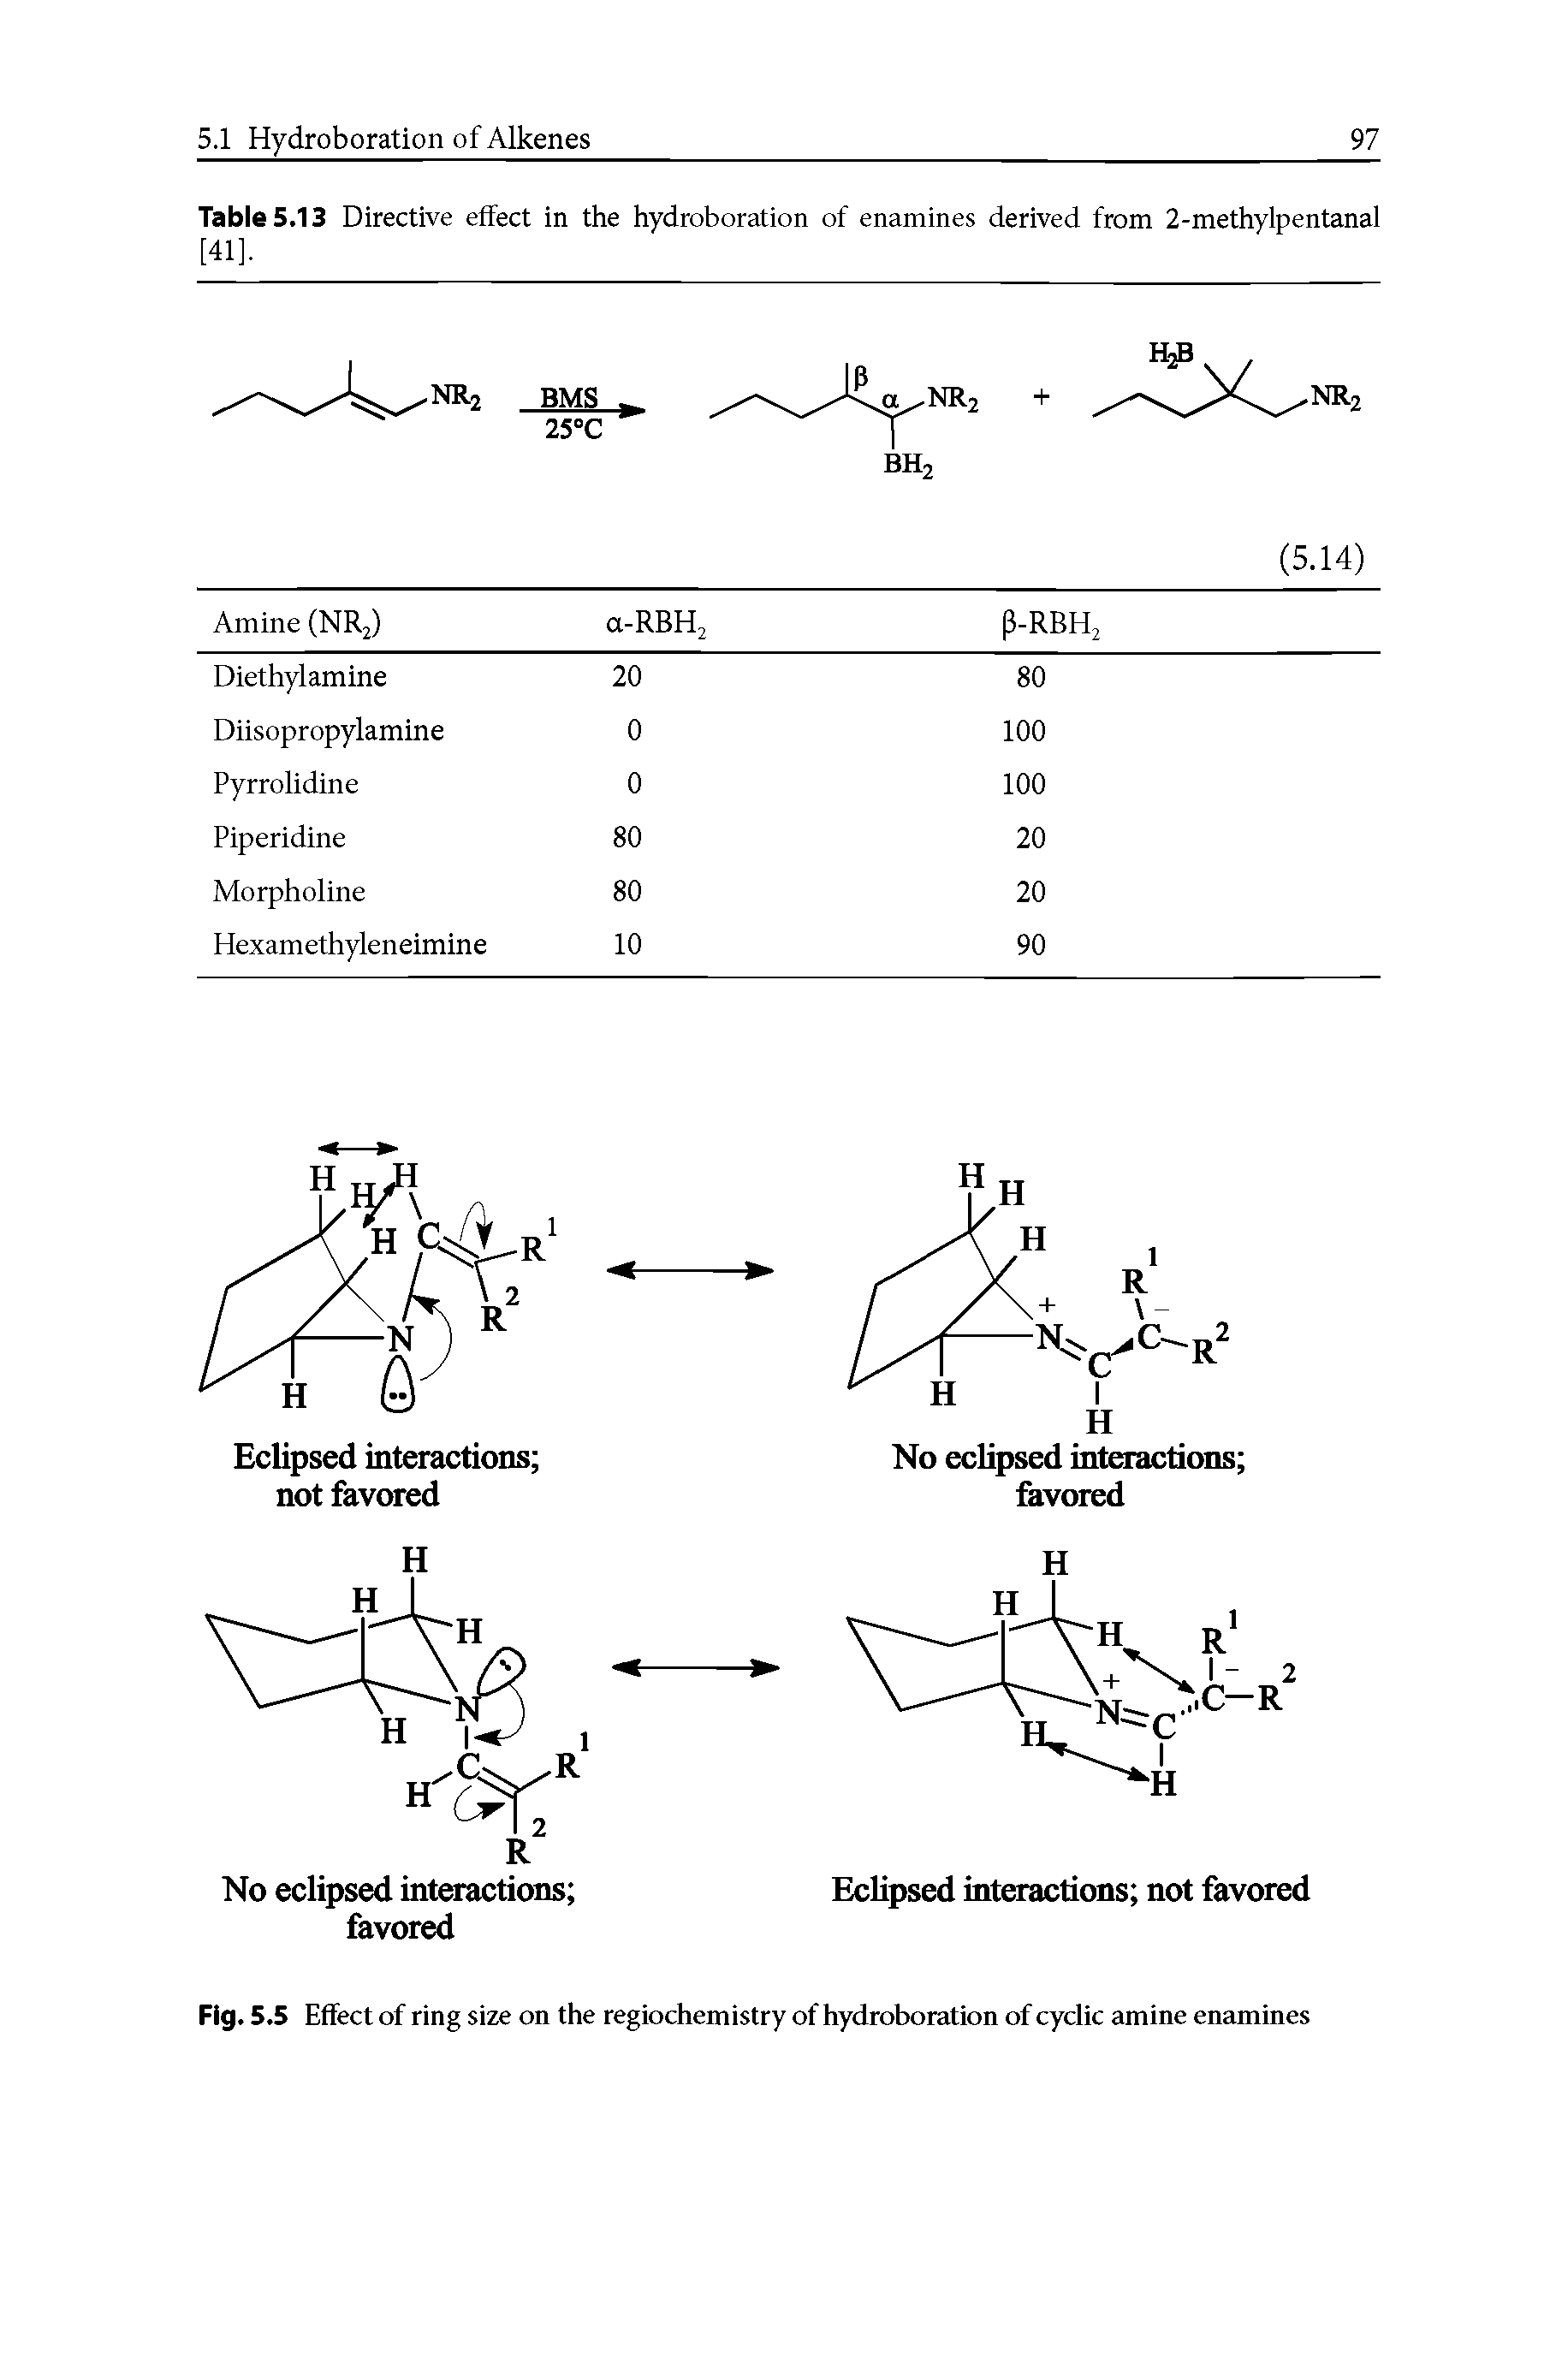 Fig. 5.5 Effect of ring size on the regiochemistry of hydroboration of cyclic amine enamines...